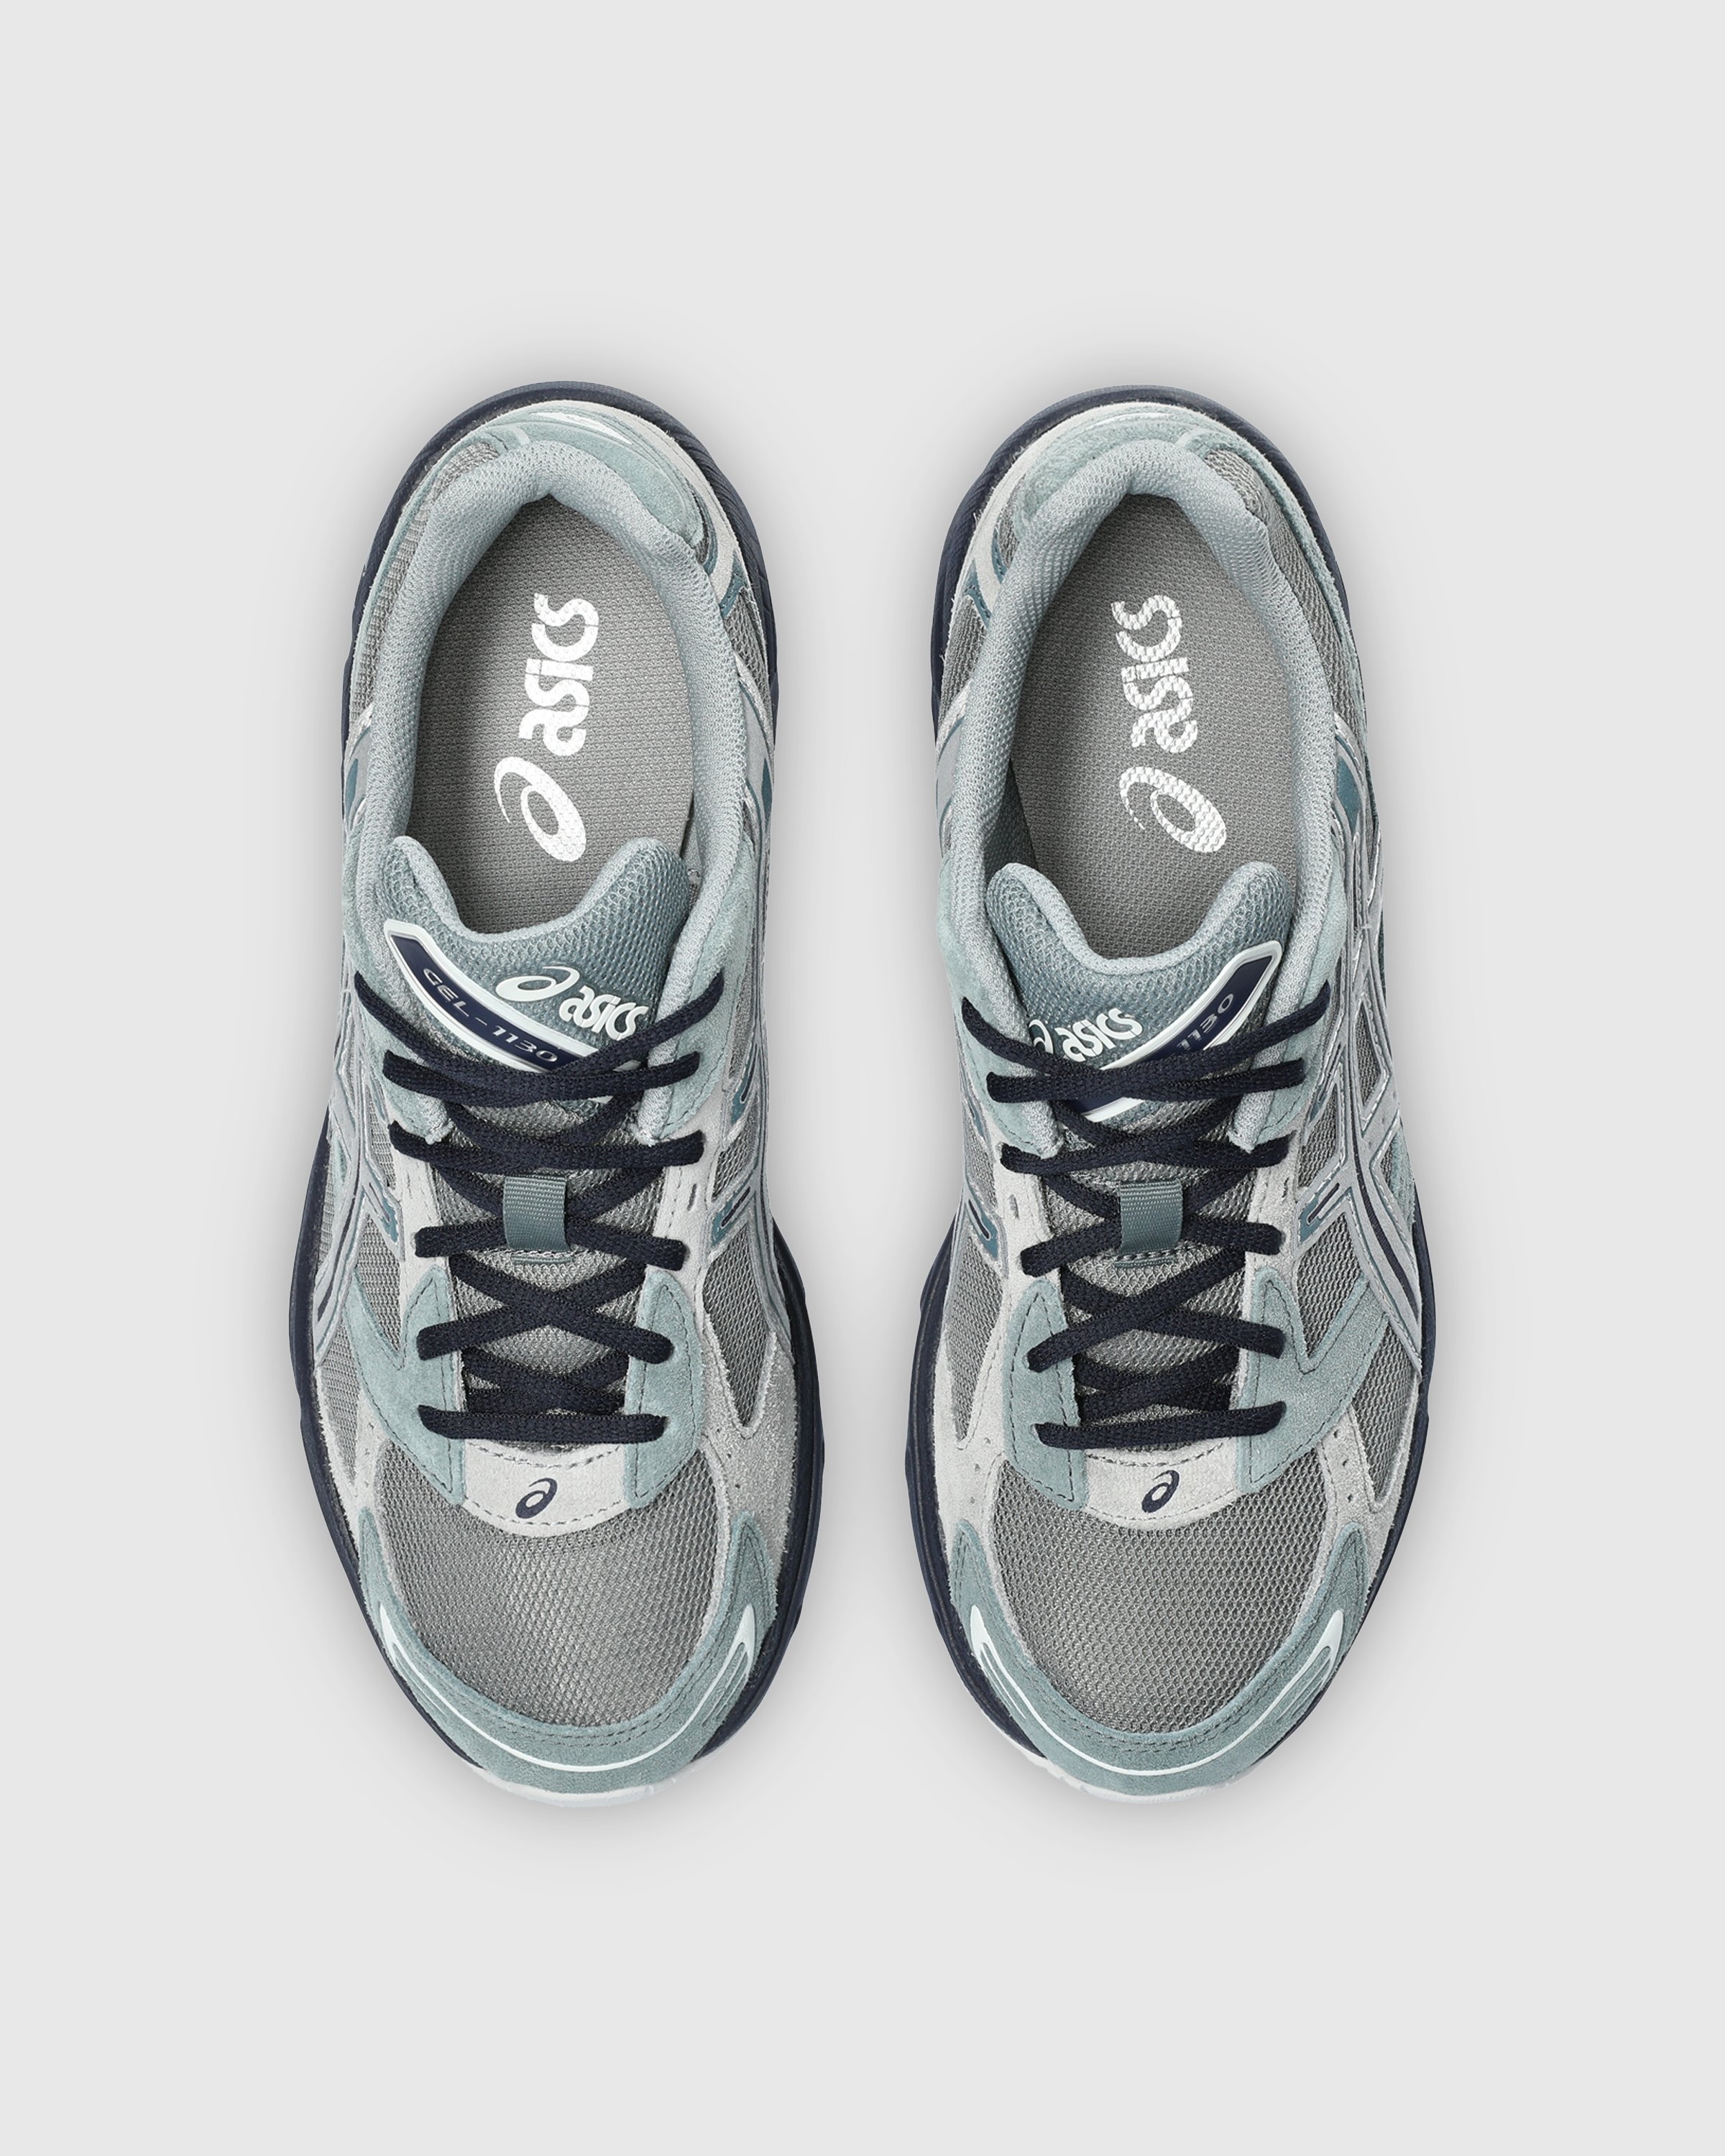 asics – GEL-1130 Steel Gray/Sheet Rock - Sneakers - Grey - Image 4